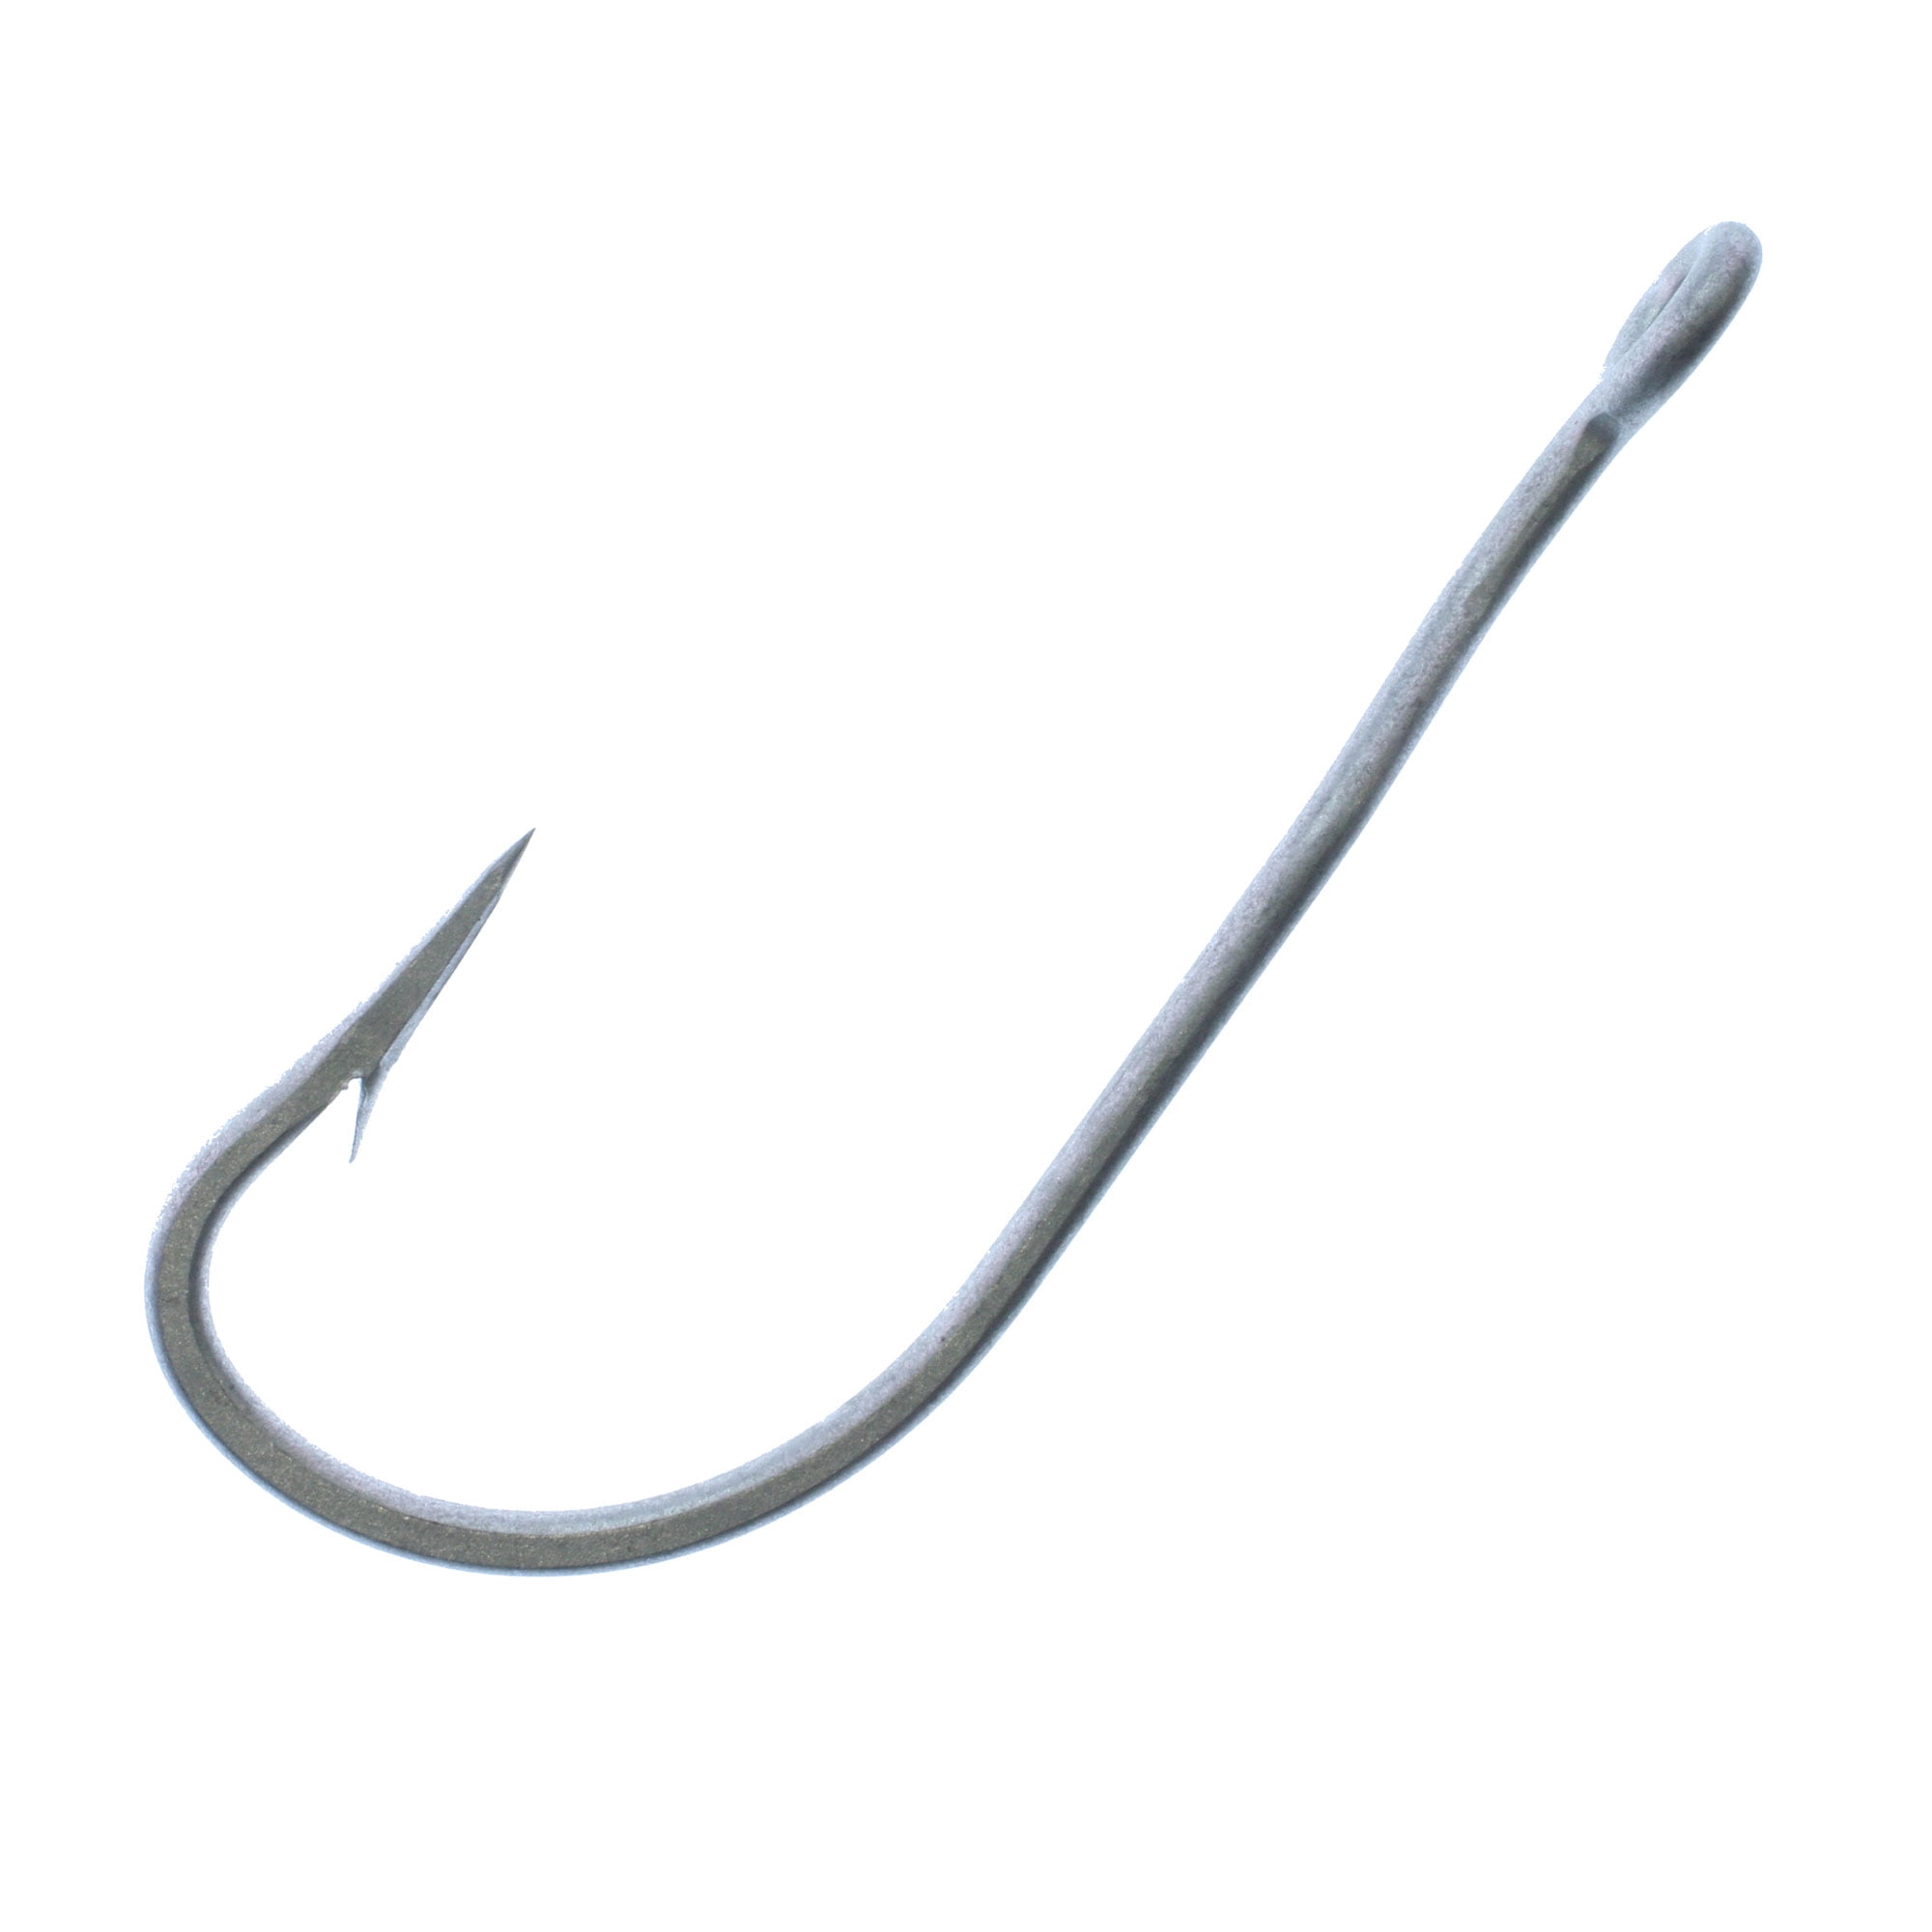 Tru-Turn Perma Steel Catfish Hook Size 2/0 